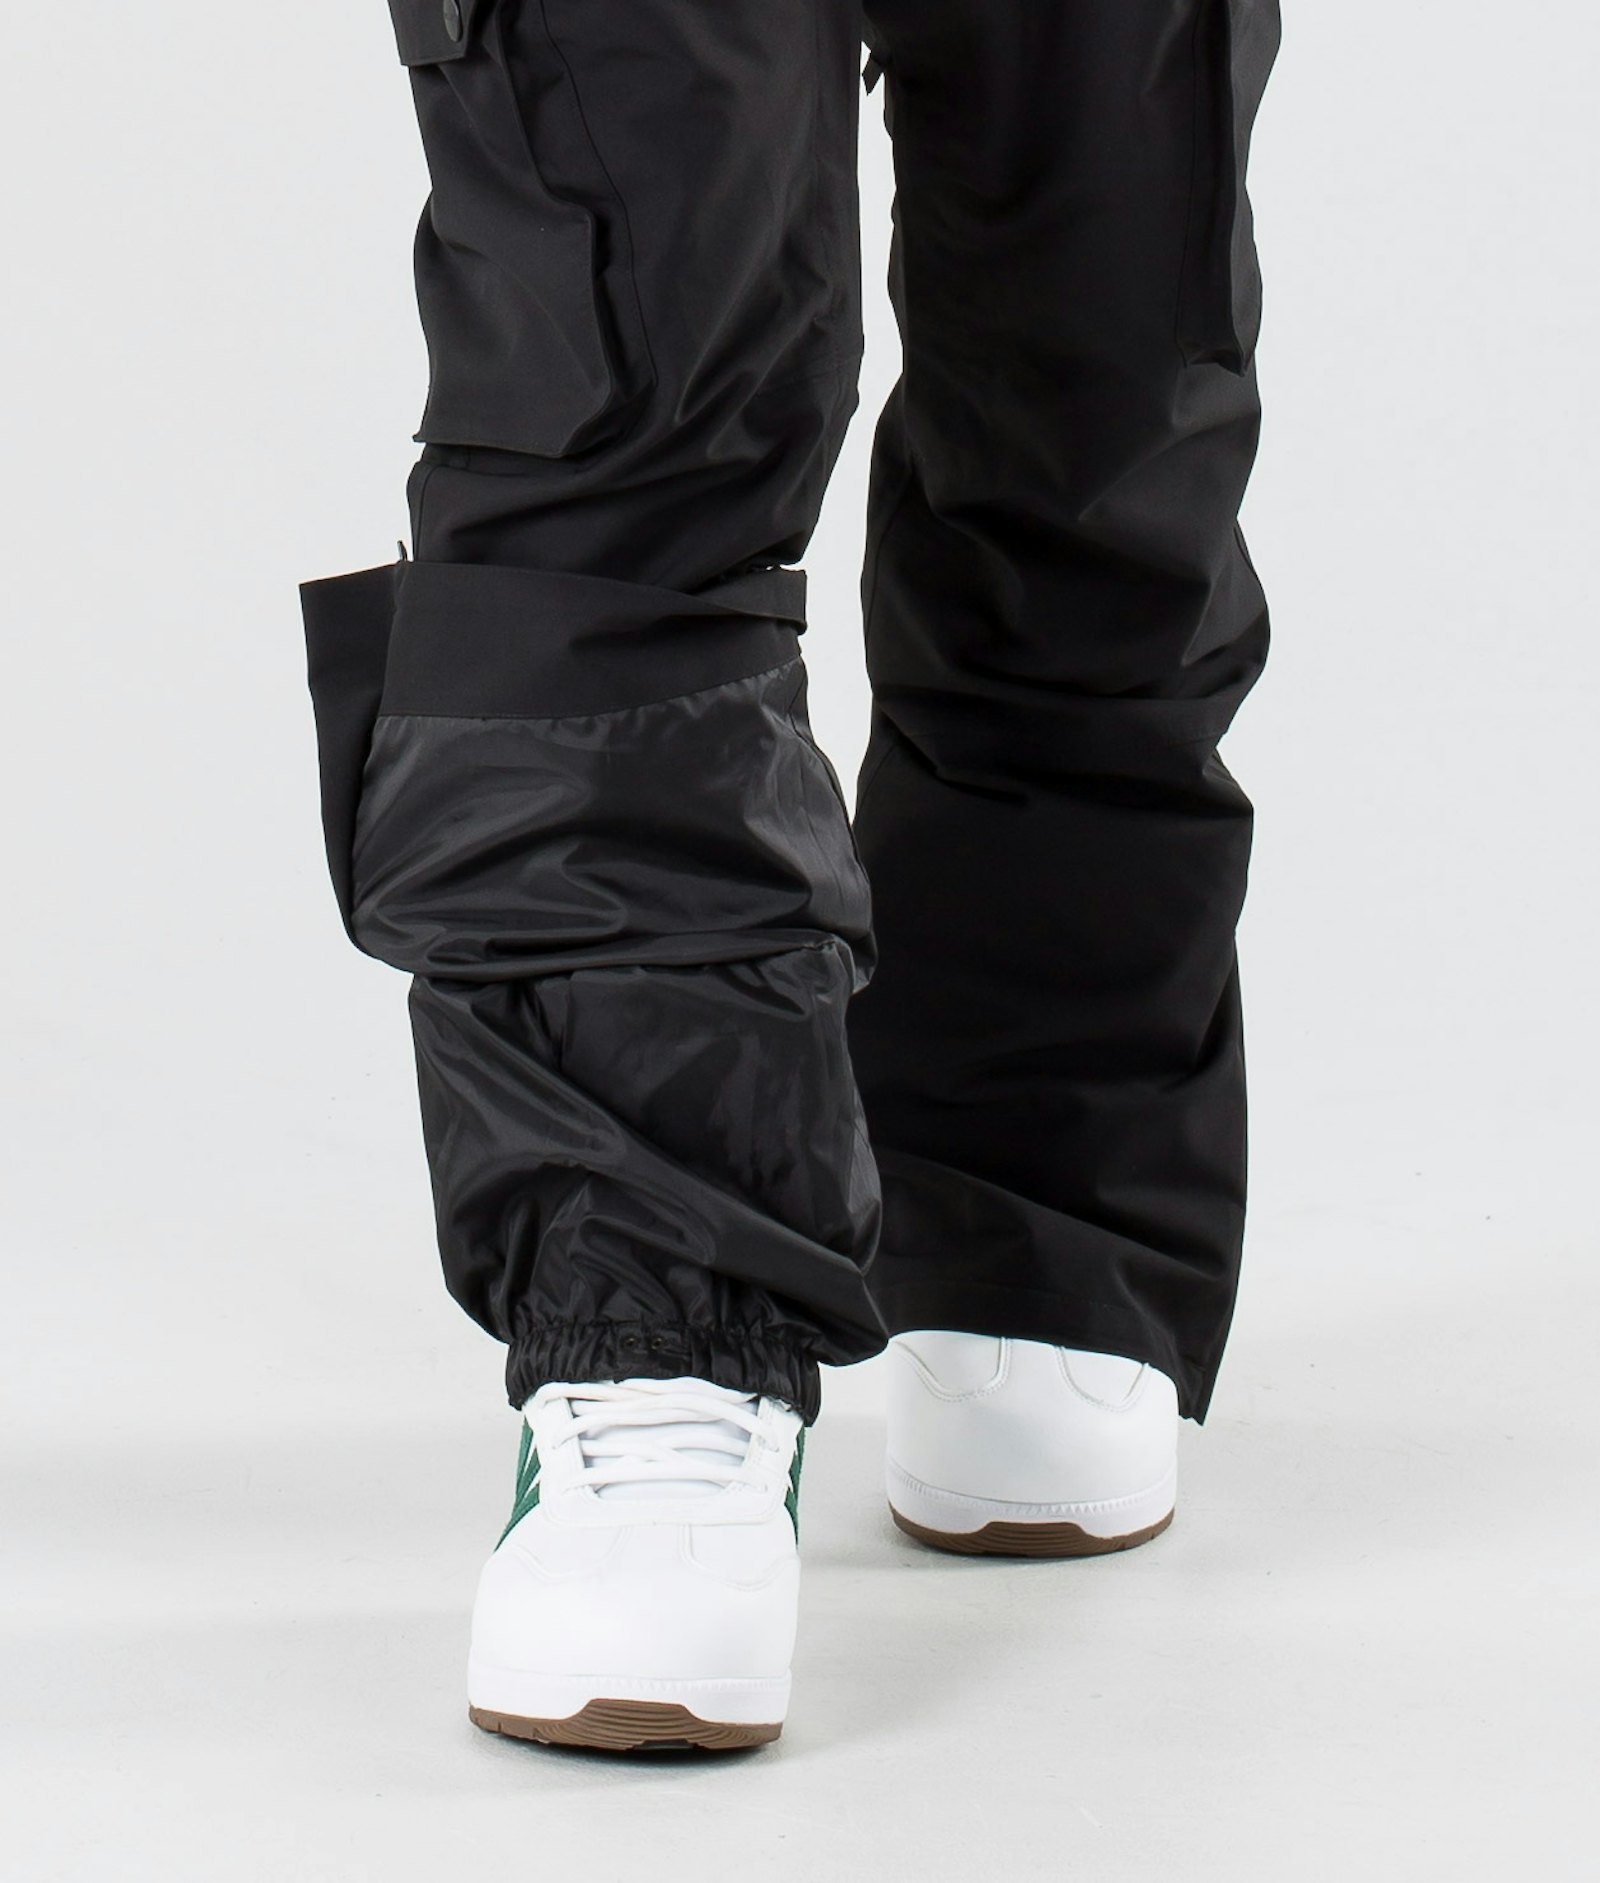 Doom 2019 Pantalon de Snowboard Homme Black